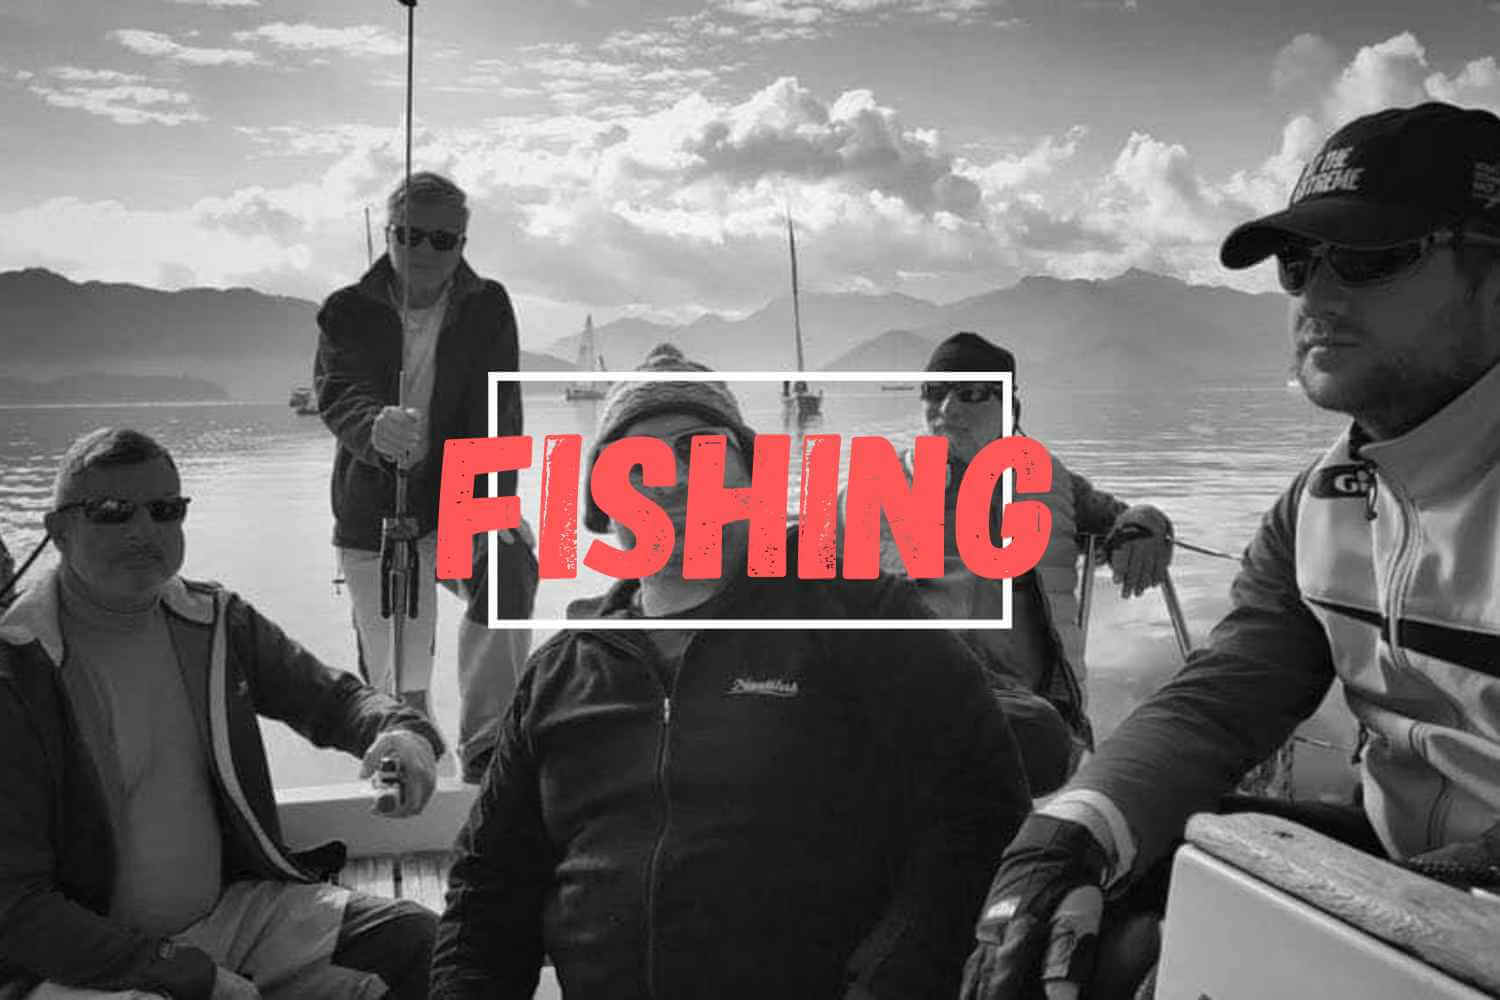 Fishing in Turkey, local fisherman, carp fishing and open sea fishing tours